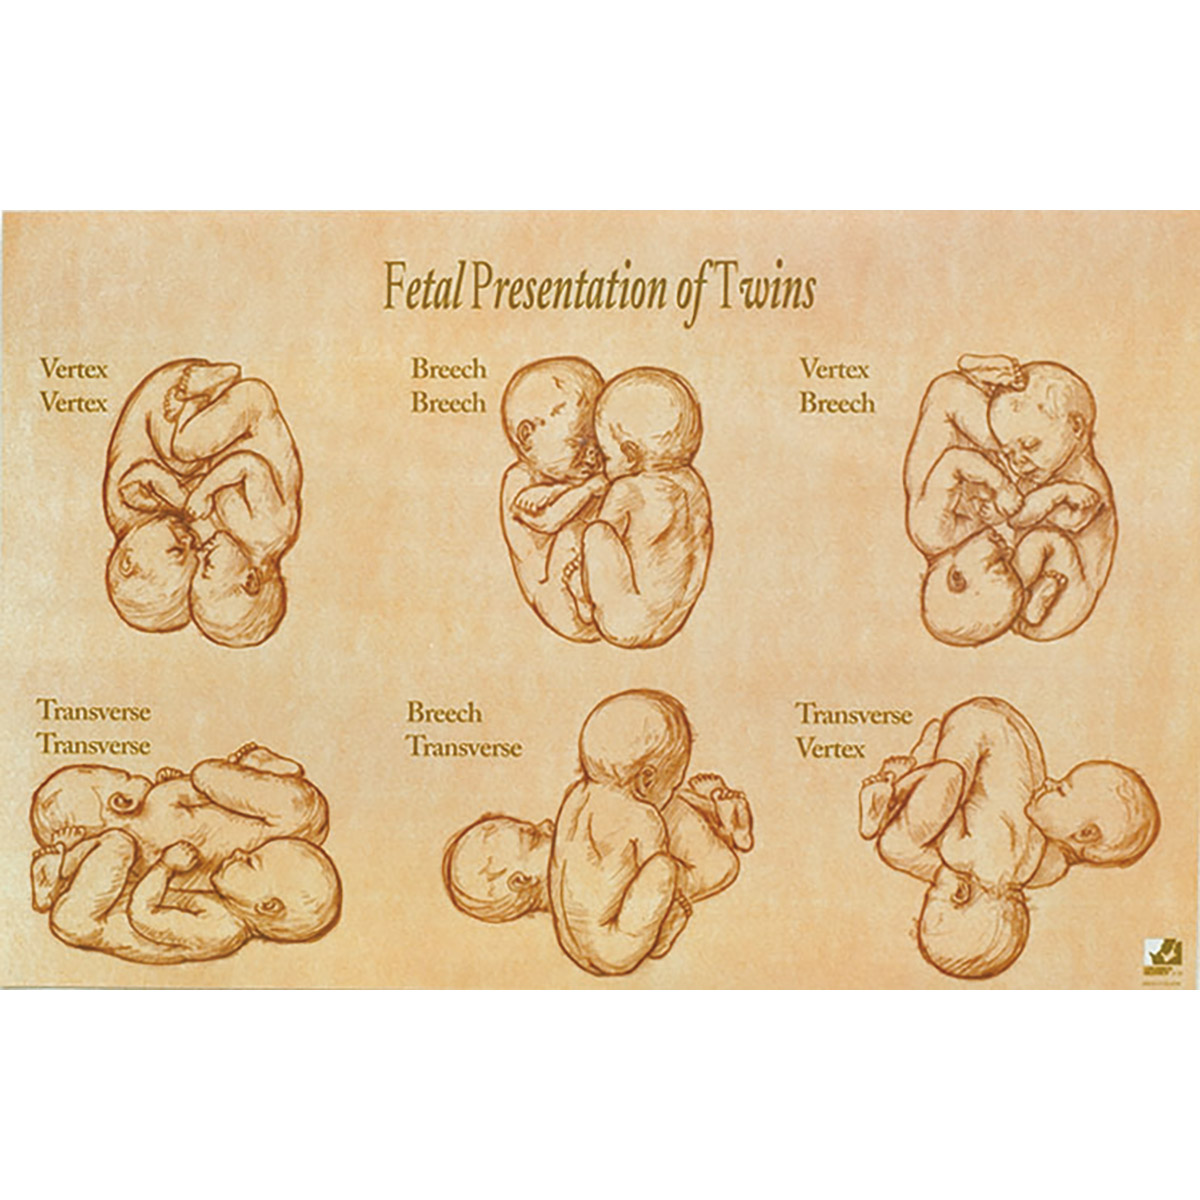 presentation of twin pregnancy